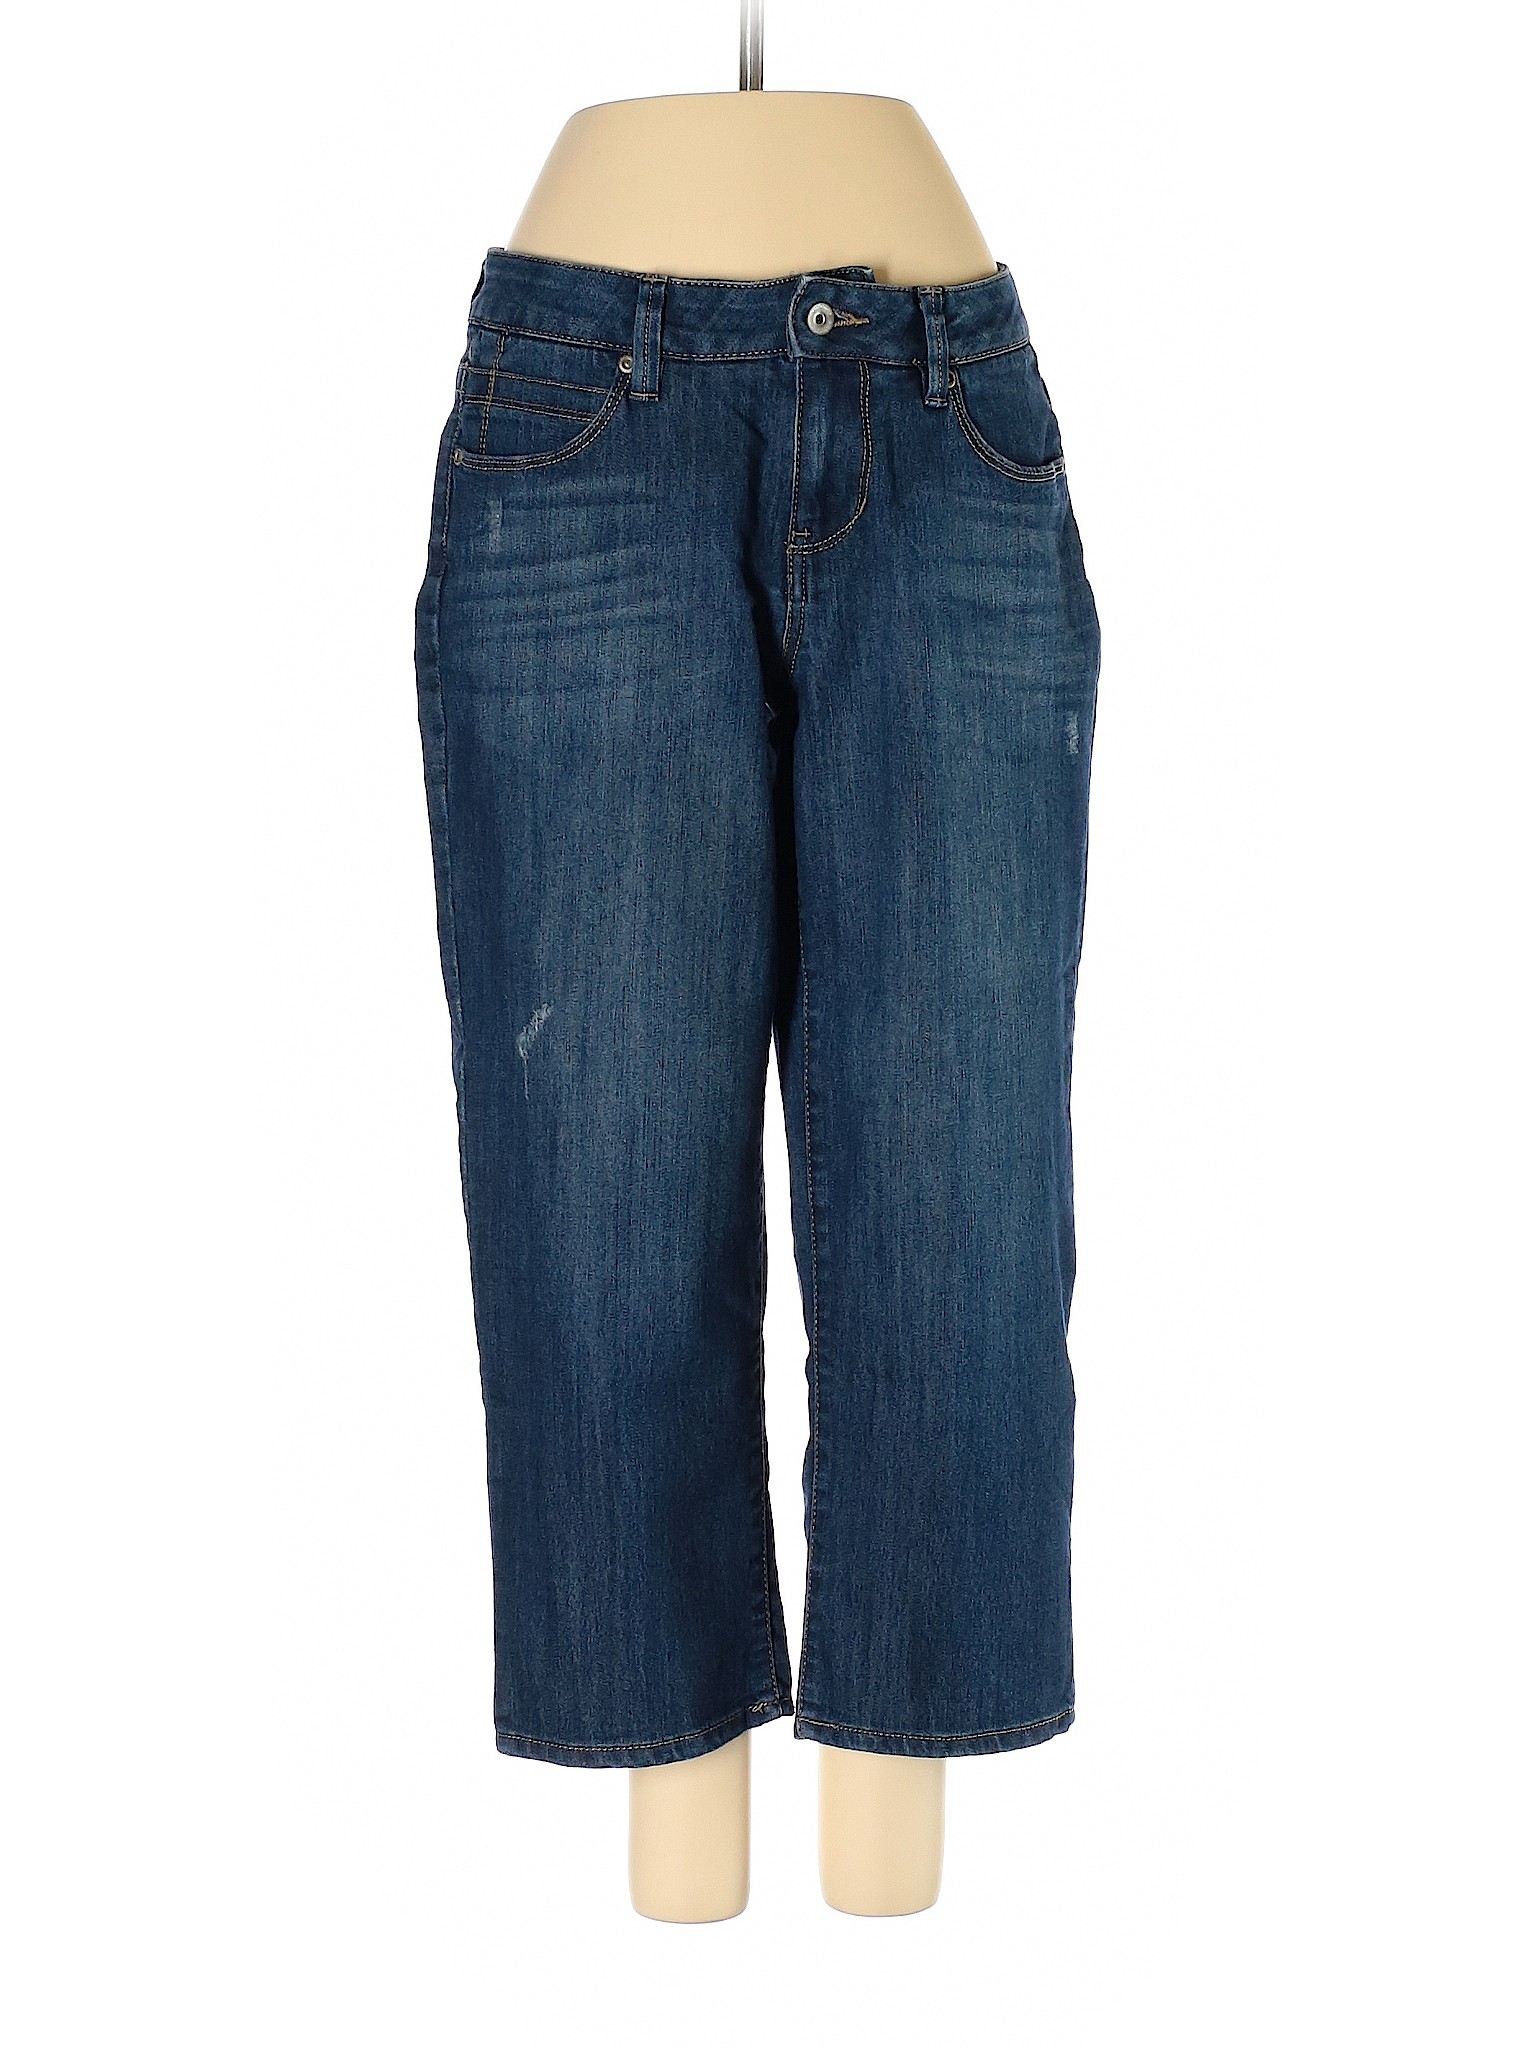 SONOMA life + style Women Blue Jeans 4 | eBay